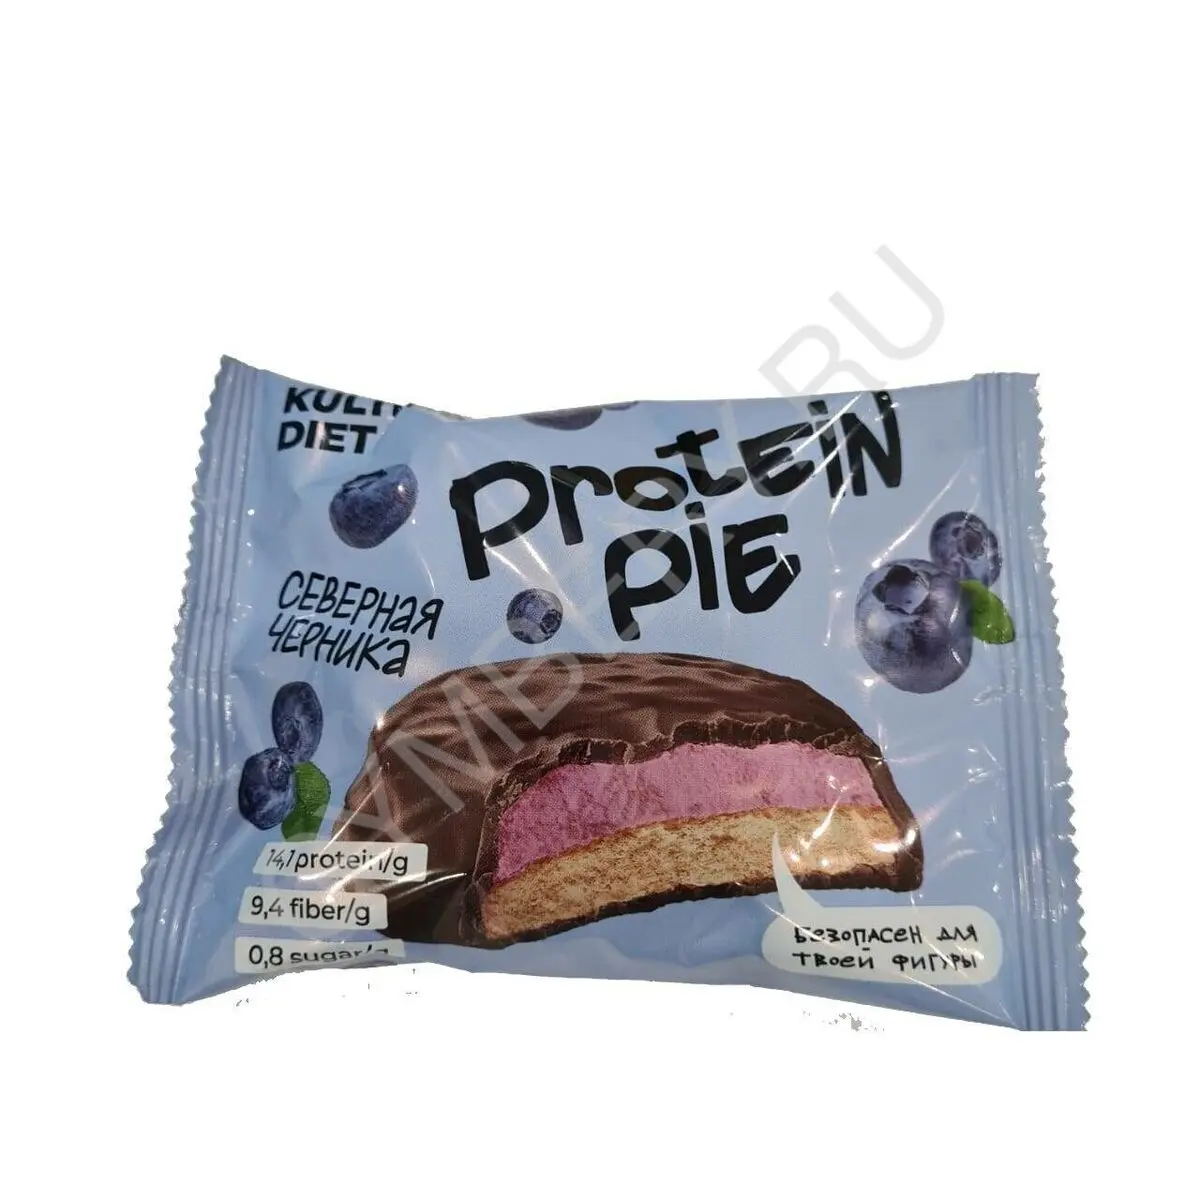 Kultlab Protein Pie, глазурь, 60 гр (Северная черника) шт, арт. 0105025